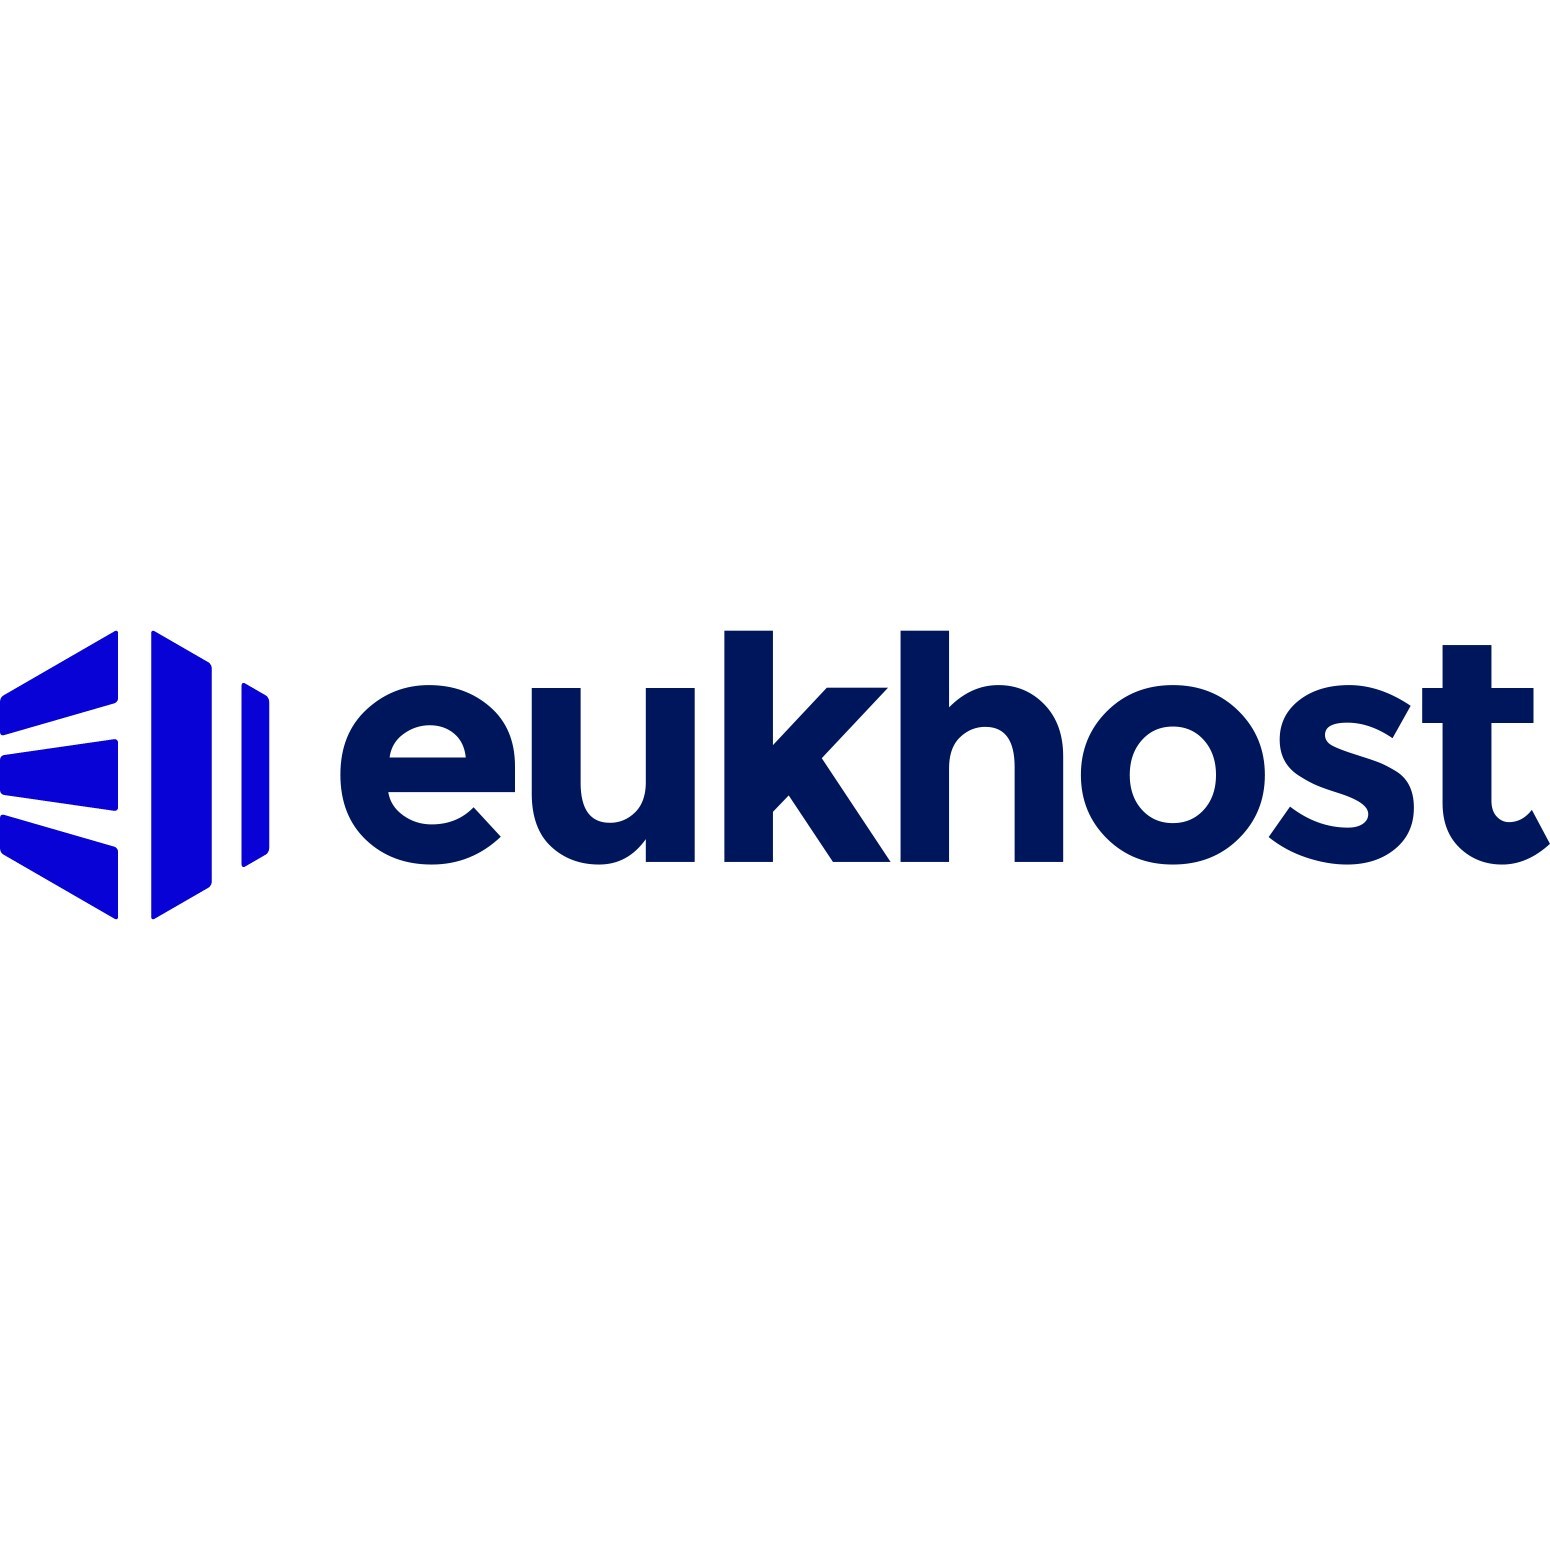 (eUK) eUKhost Ltd